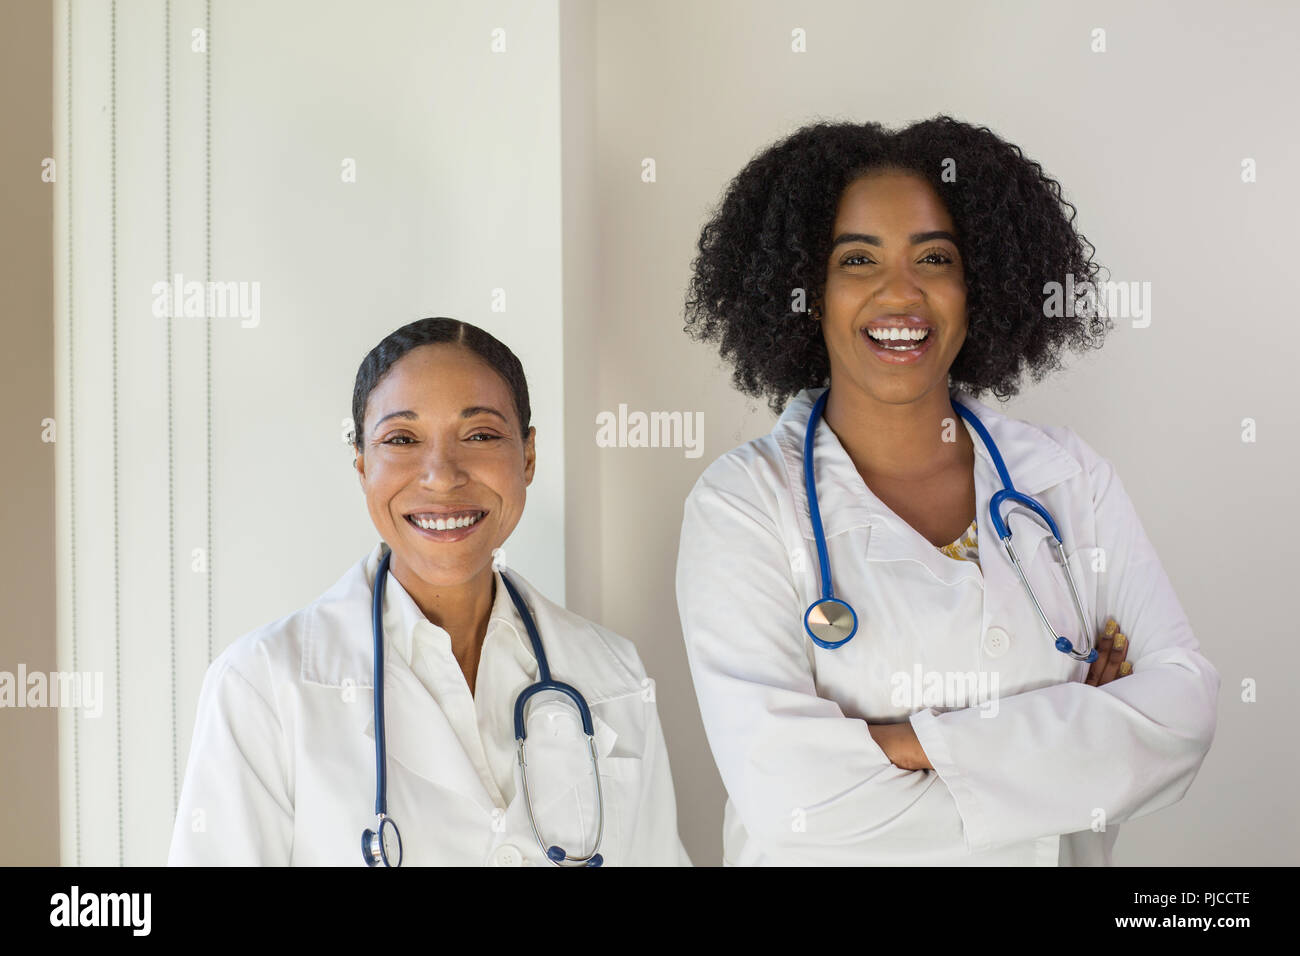 Portrait of diverse confident female healthcare professionals. Stock Photo